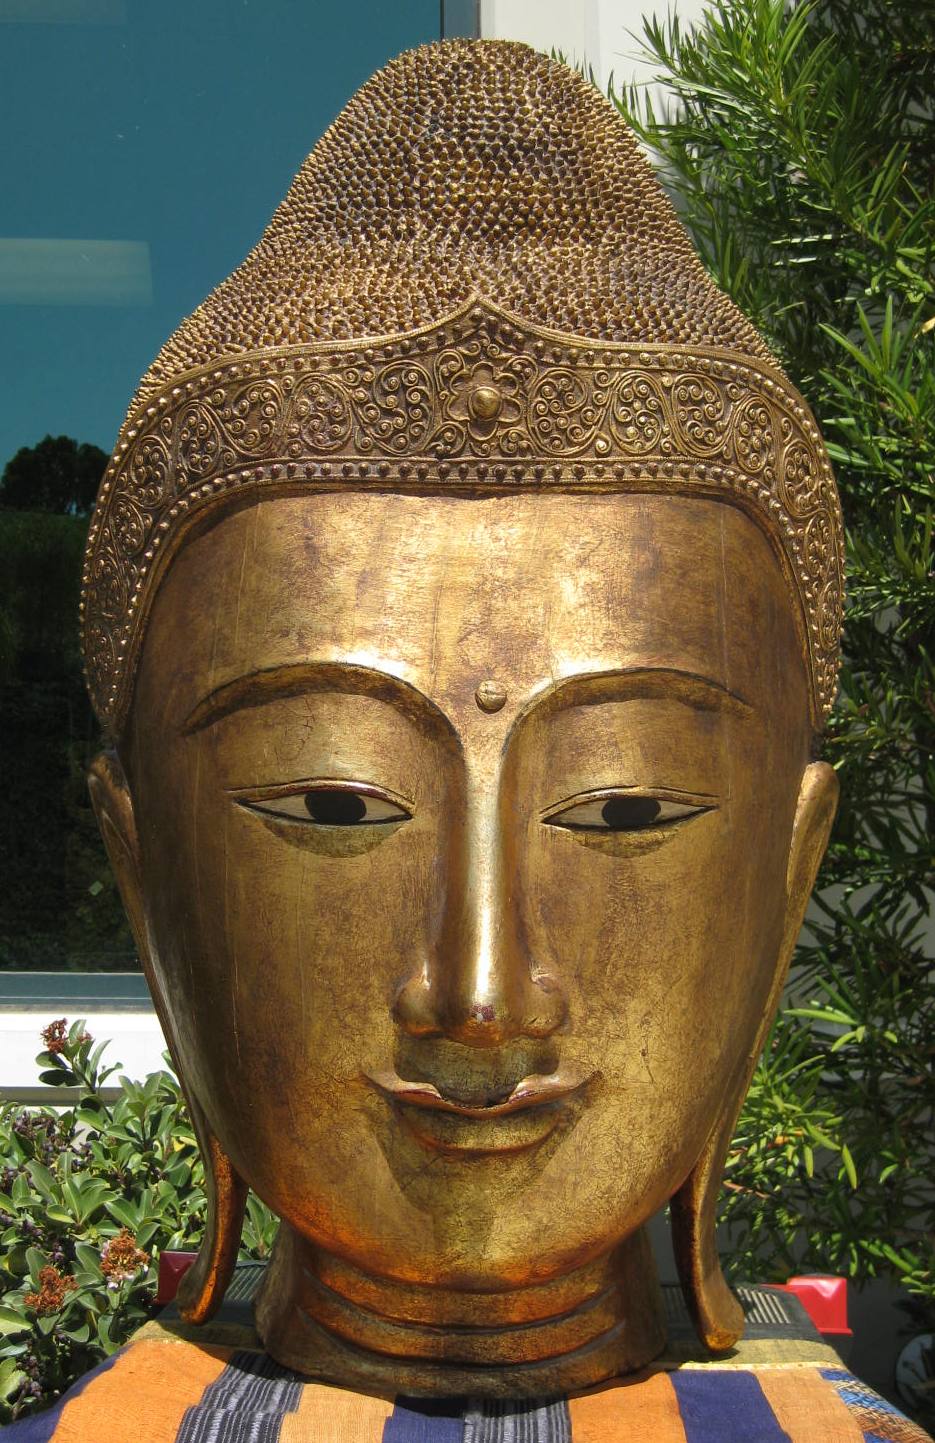 Larger than Life Size Half Buddha Head Gold LeafBuddha Head on Stand